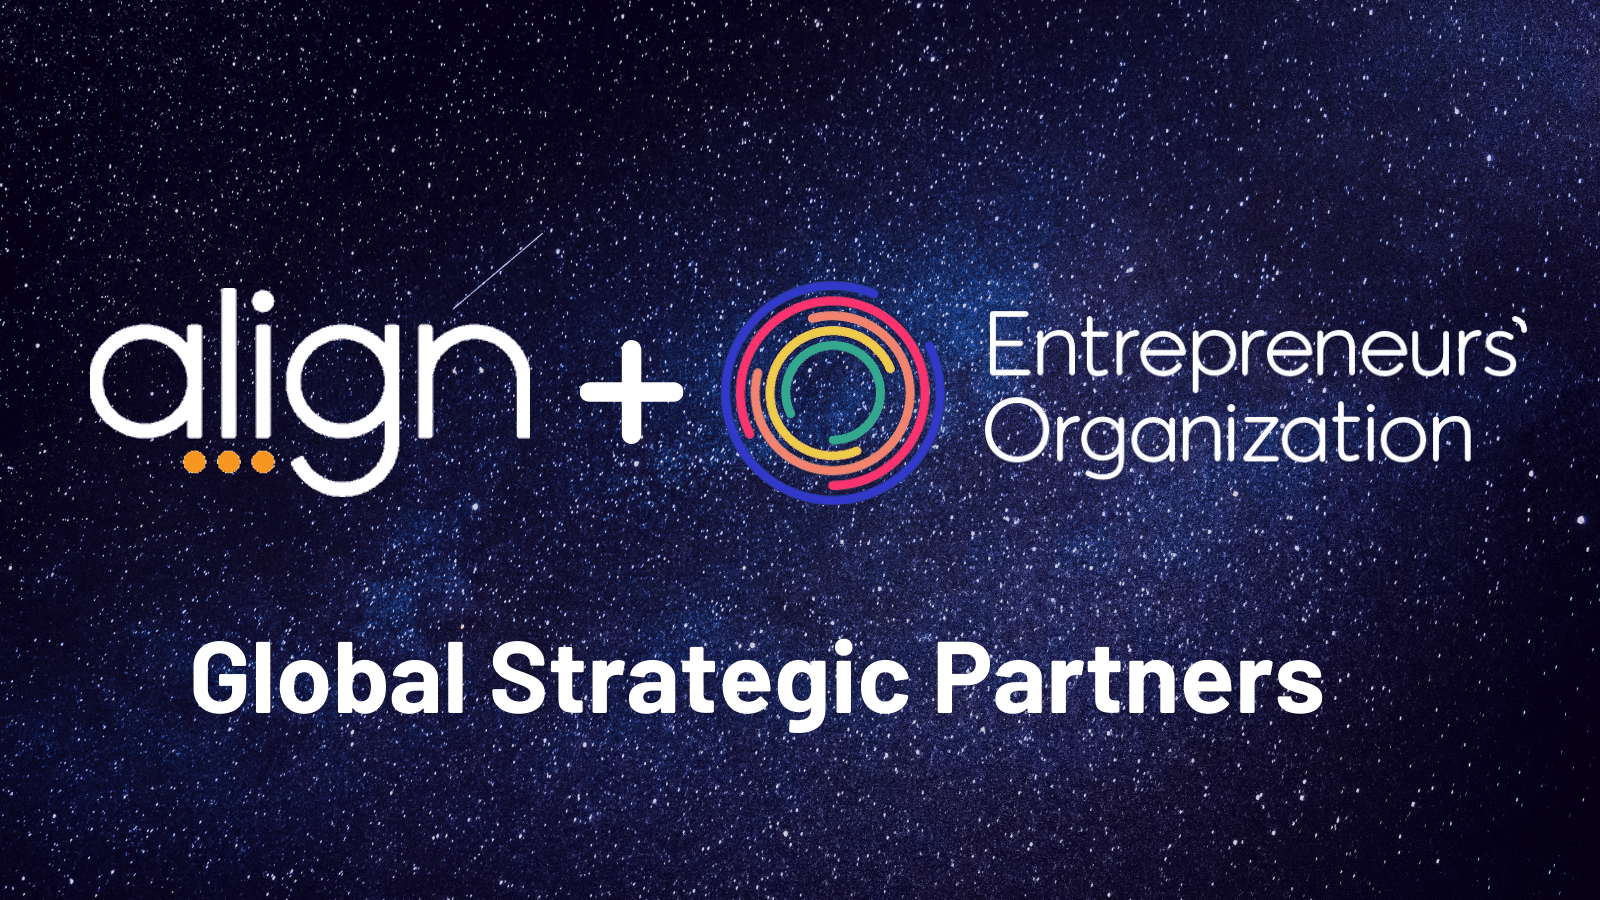 entrepreneurs organization and align partnership banner